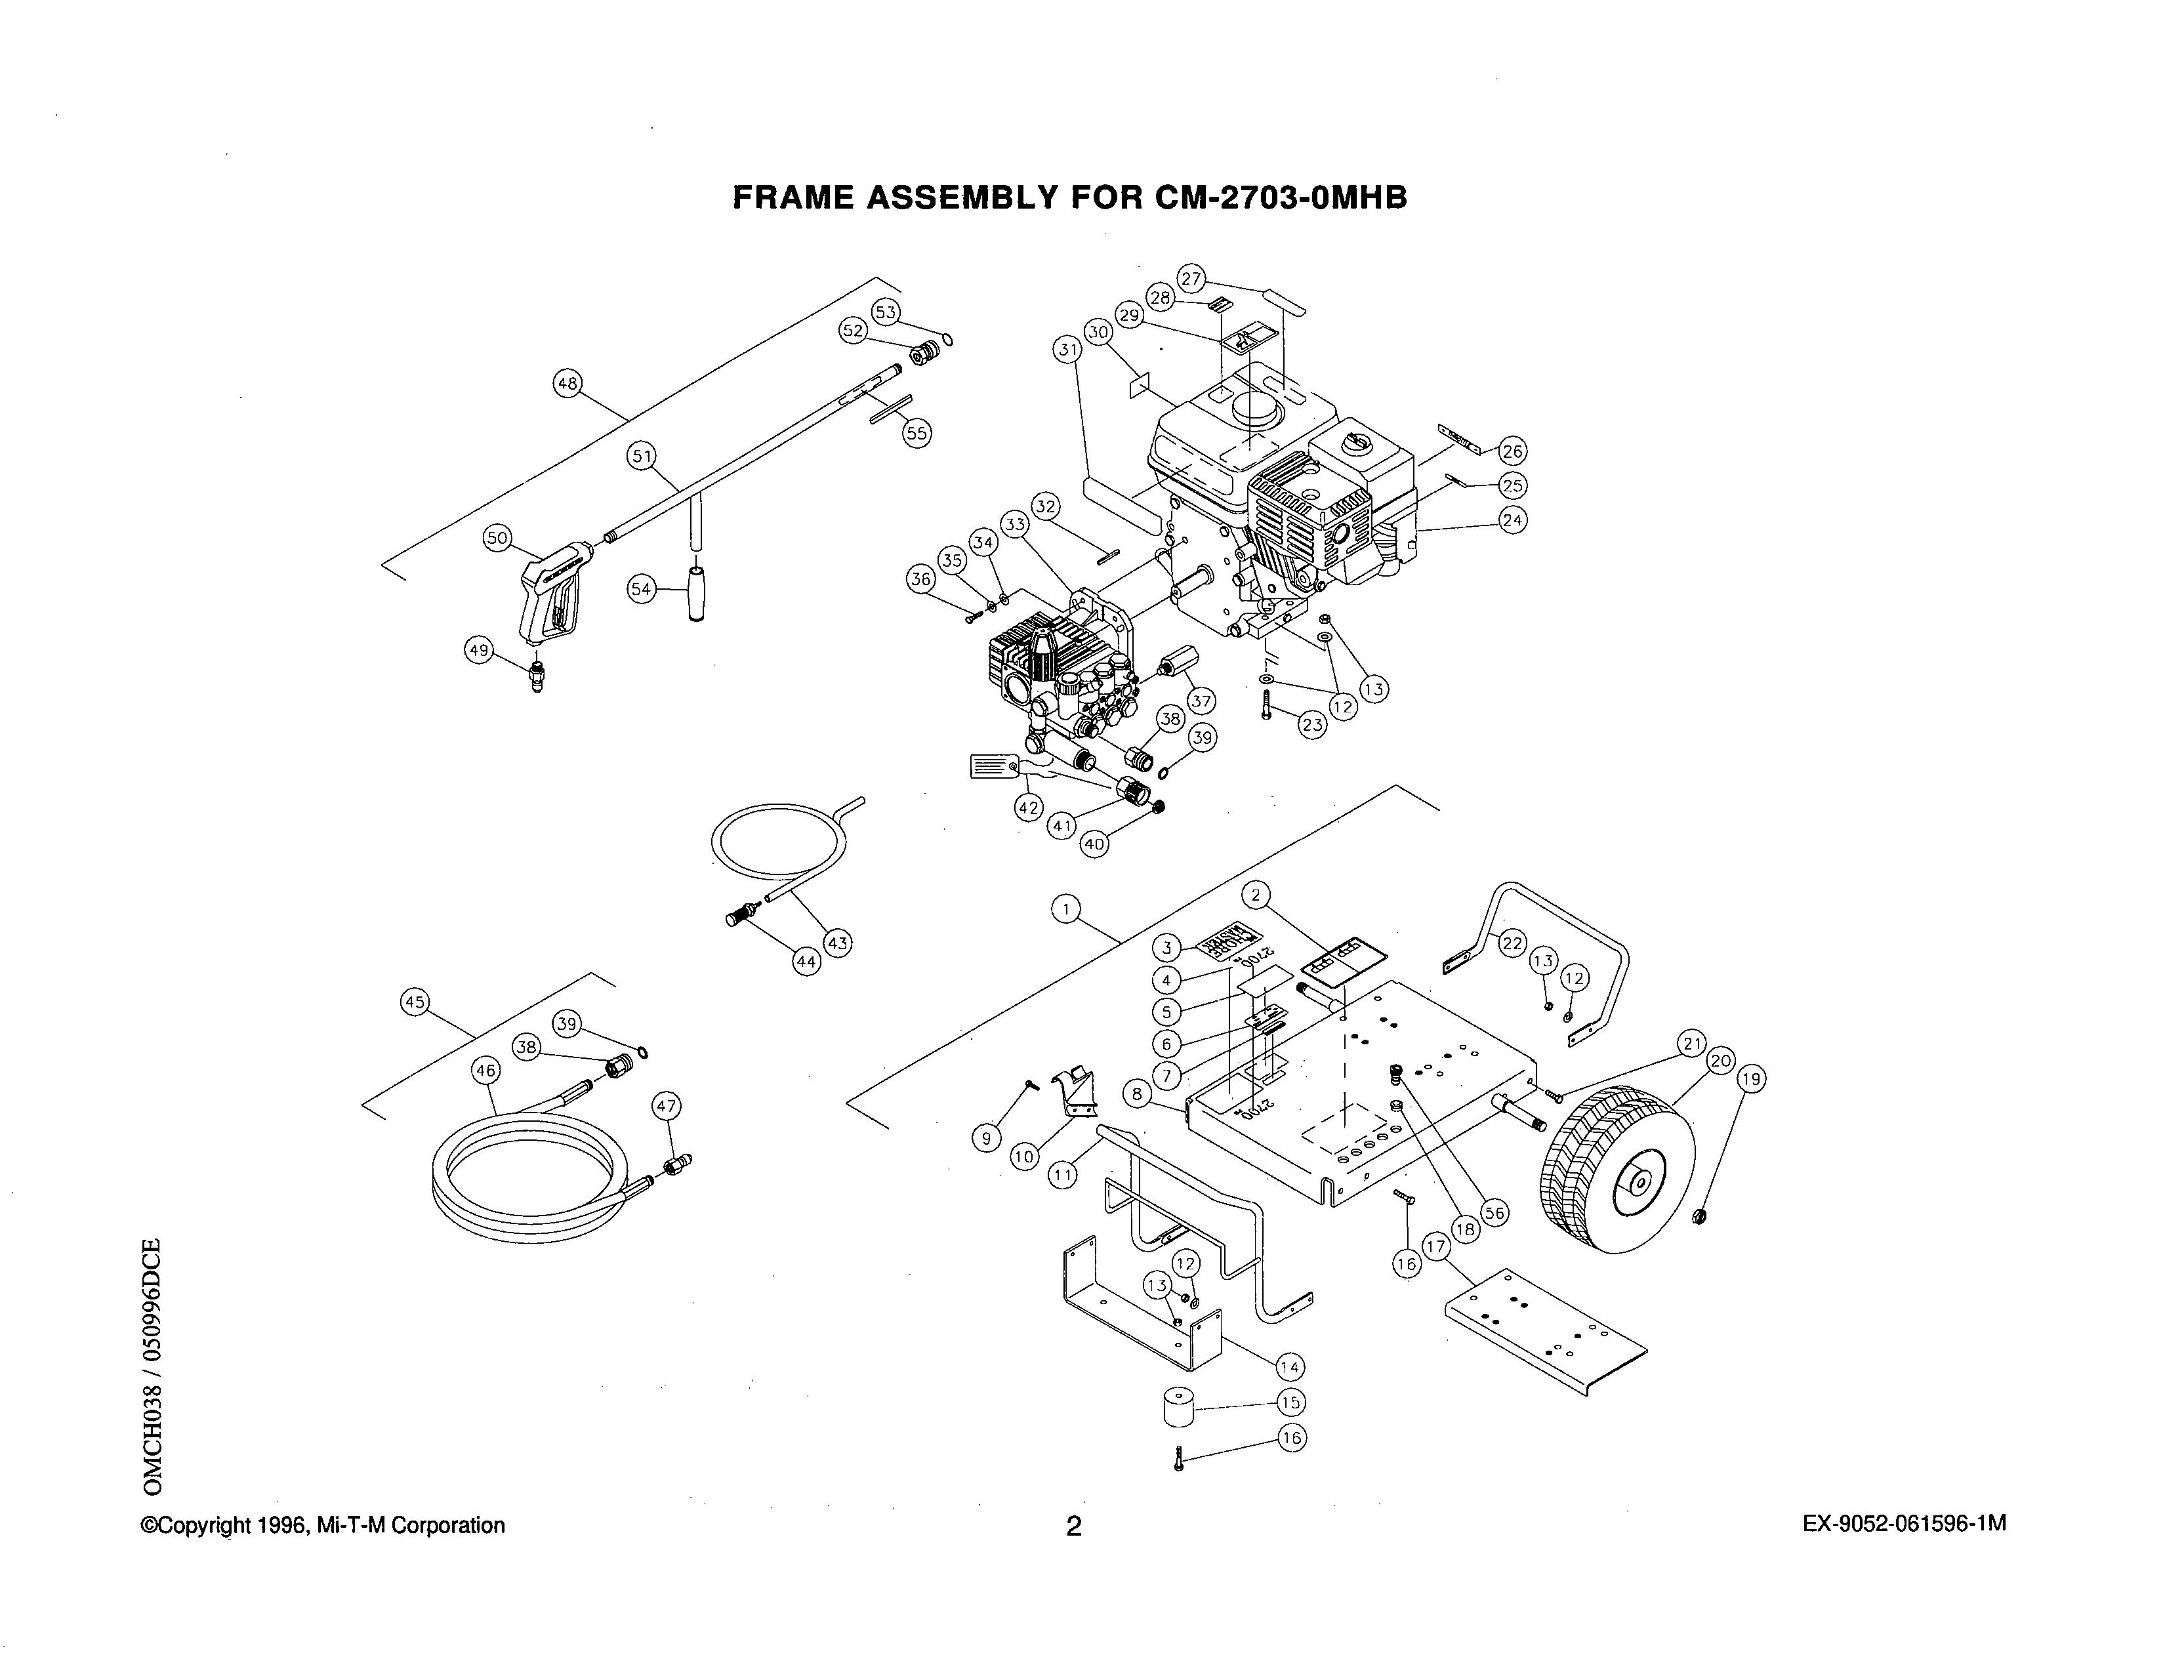 MI-T-M CM-2703-0MHB pressure washer replacement parts, pumps, repair kits, breakdowns & owners manual.